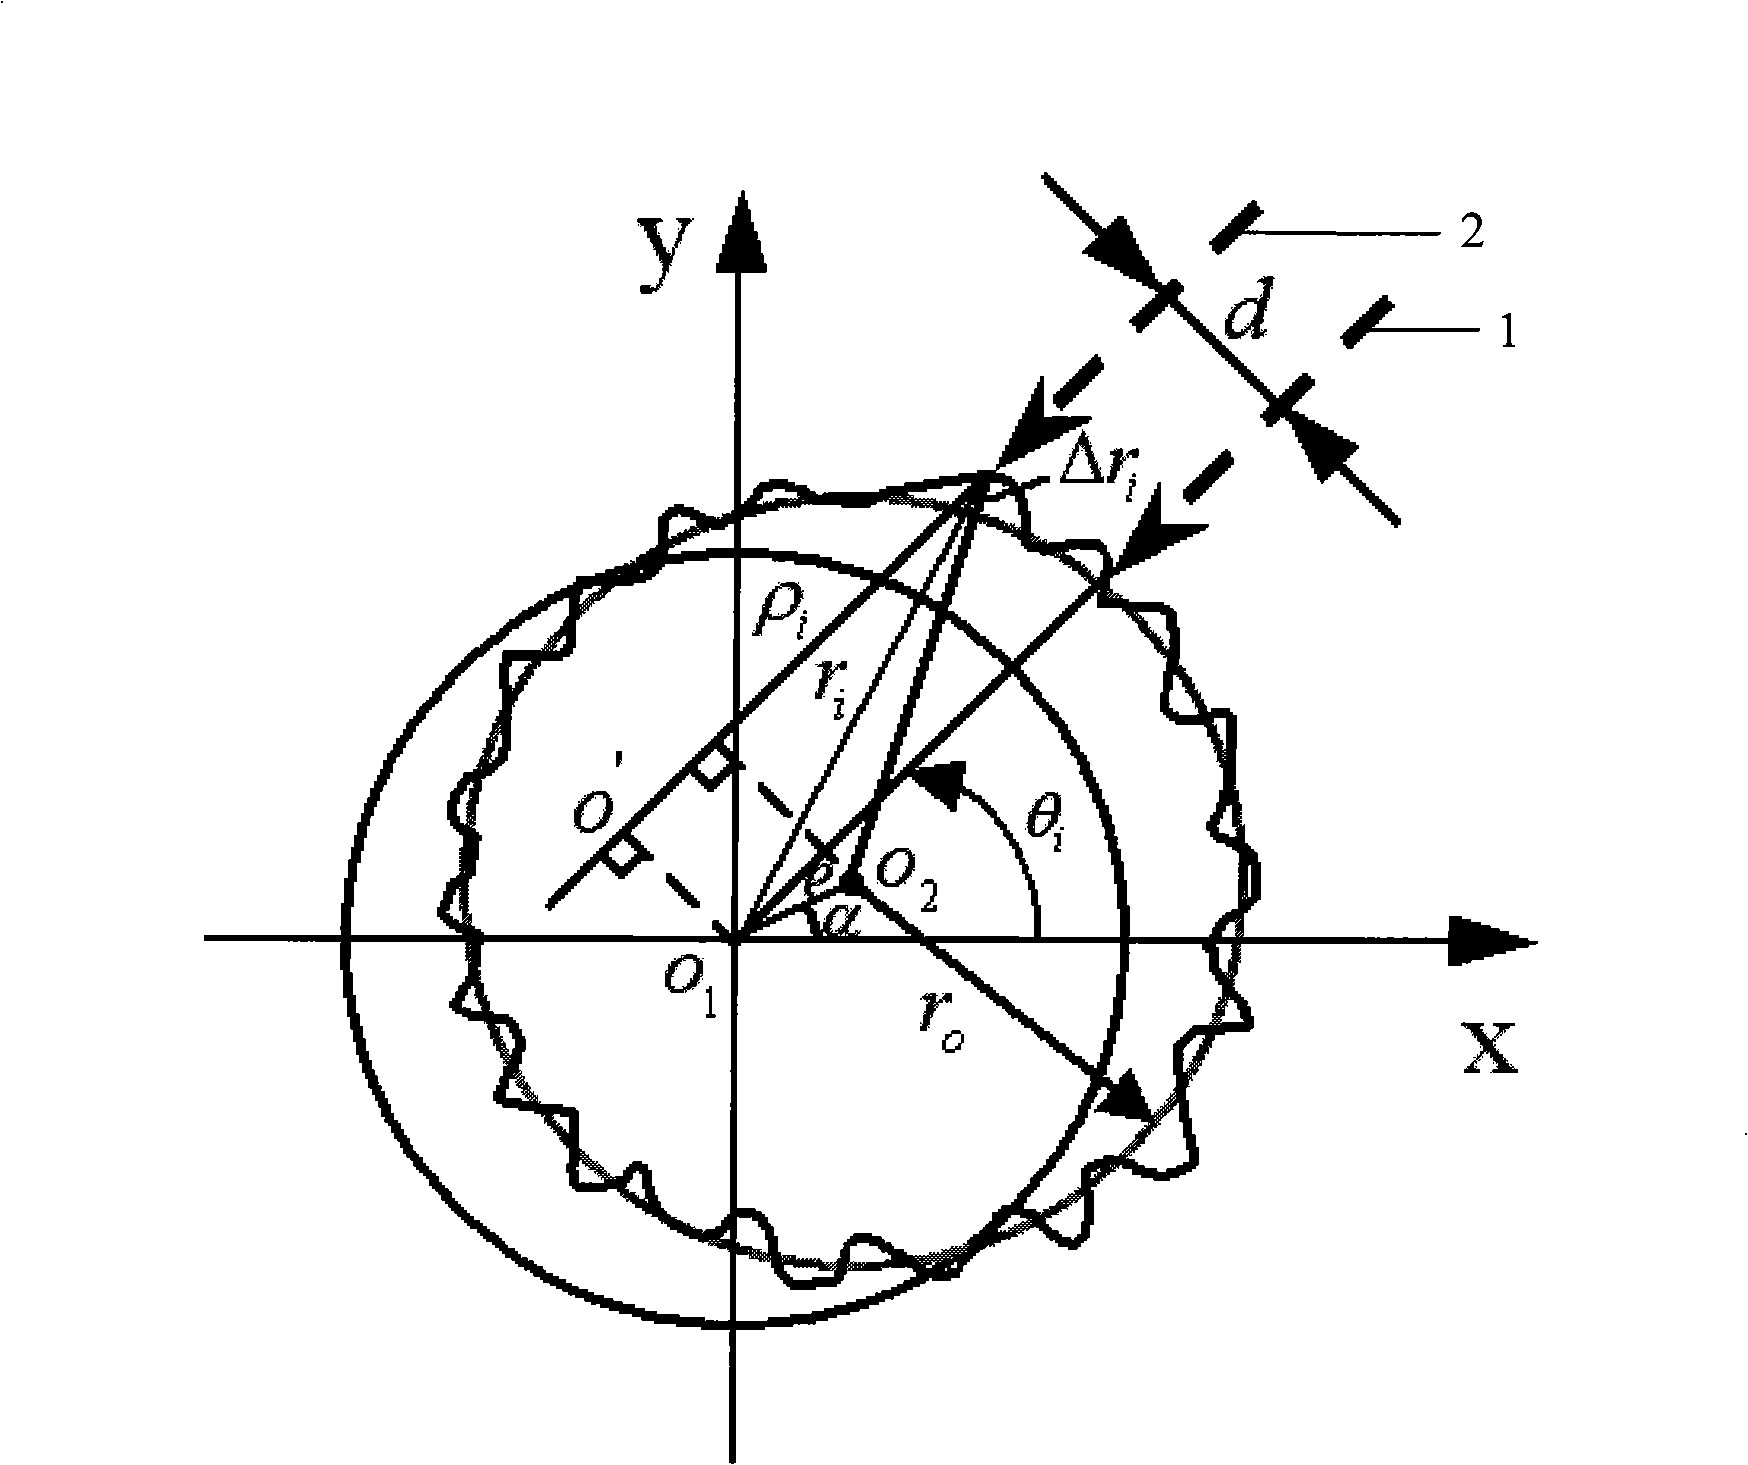 Double offset parameter circle contour measurement model and biased error separation method